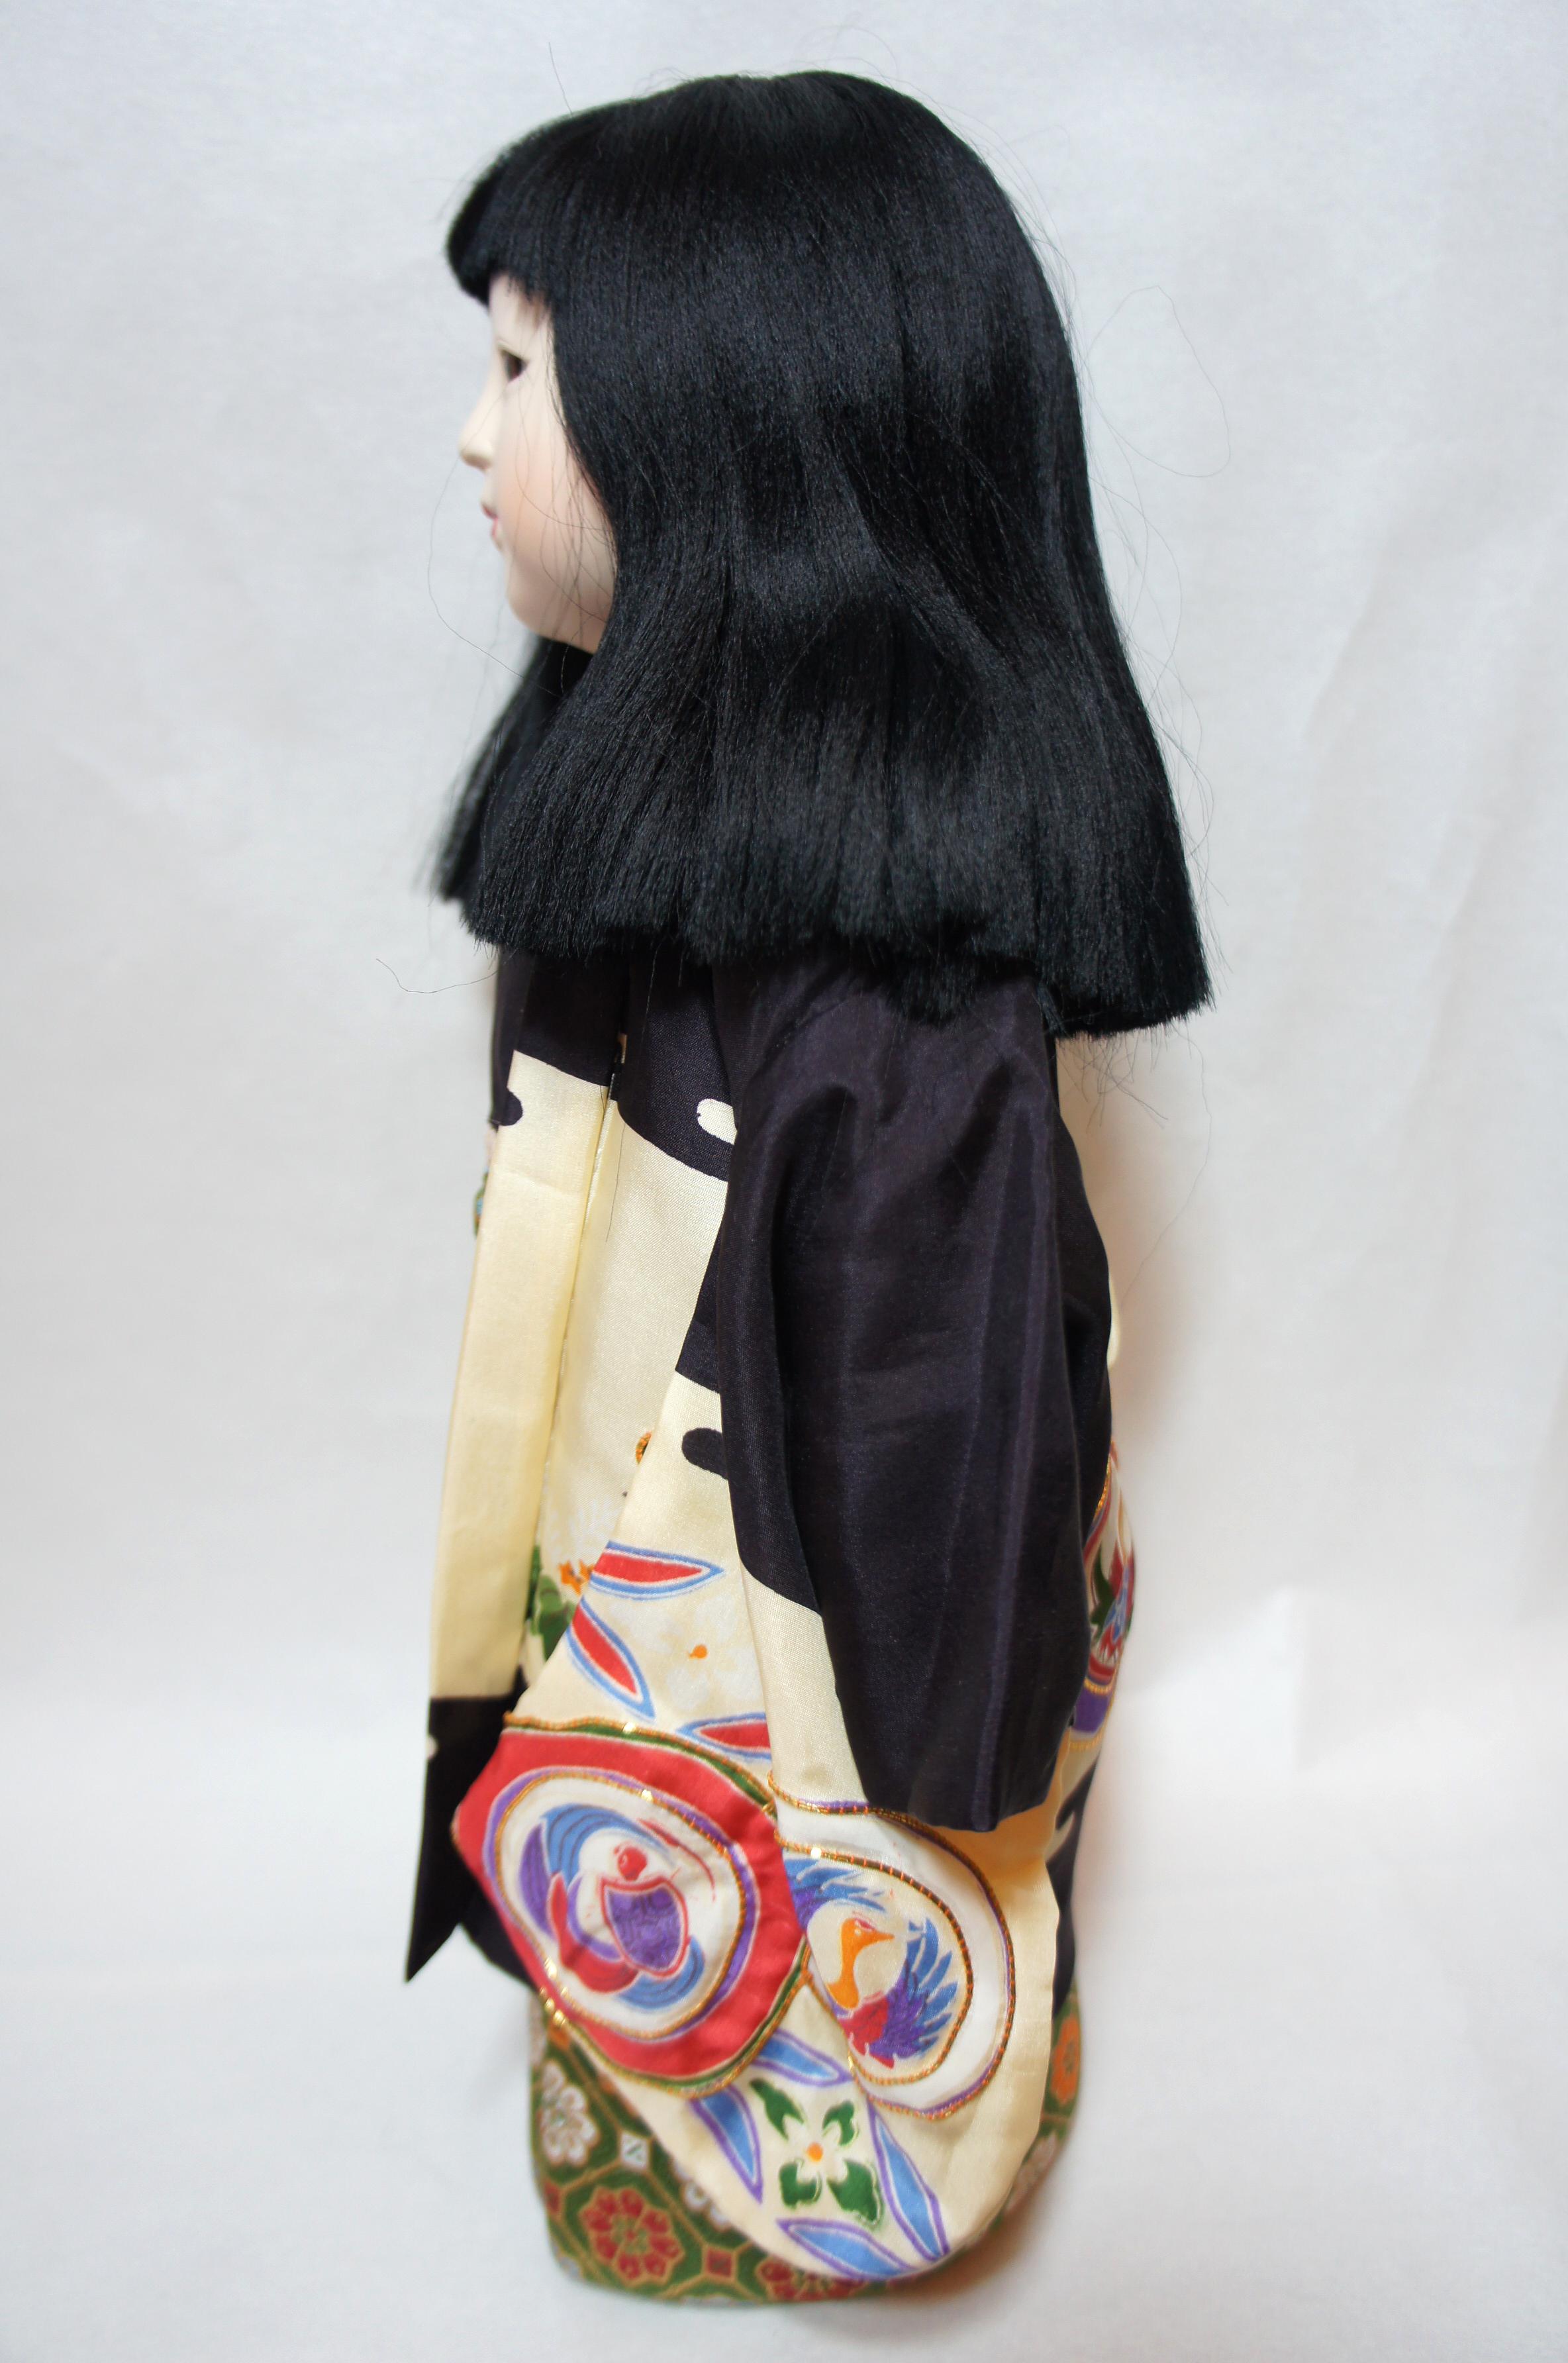 japanese boy doll